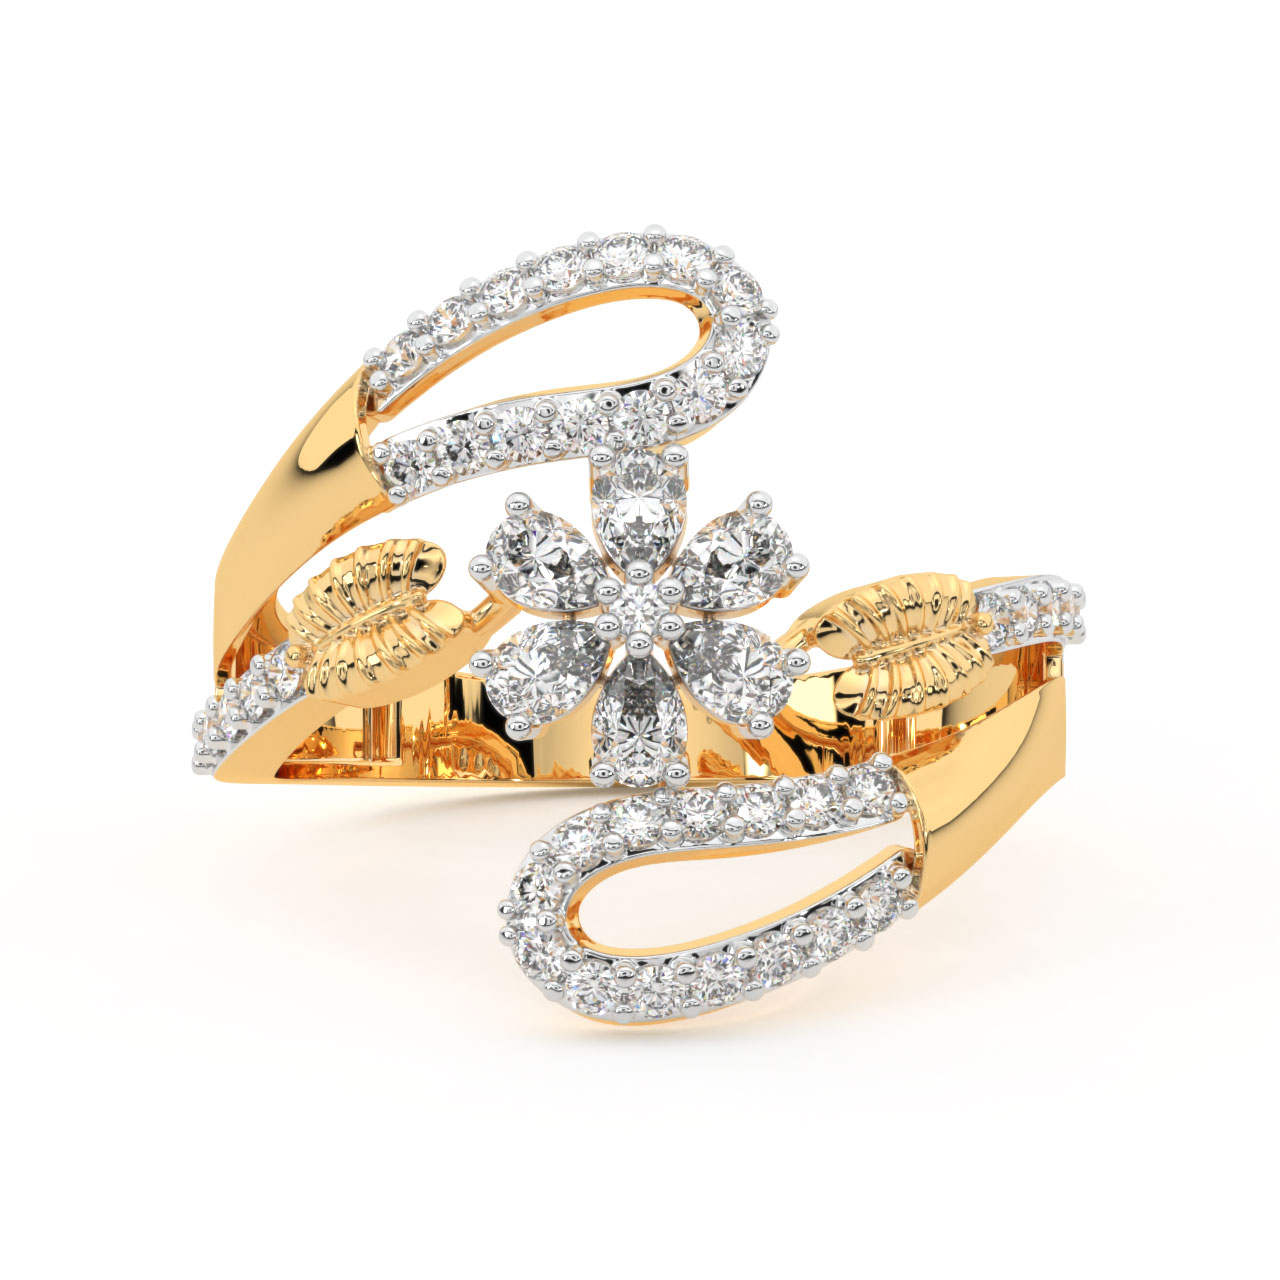 Galaway Round Diamond Engagement Ring